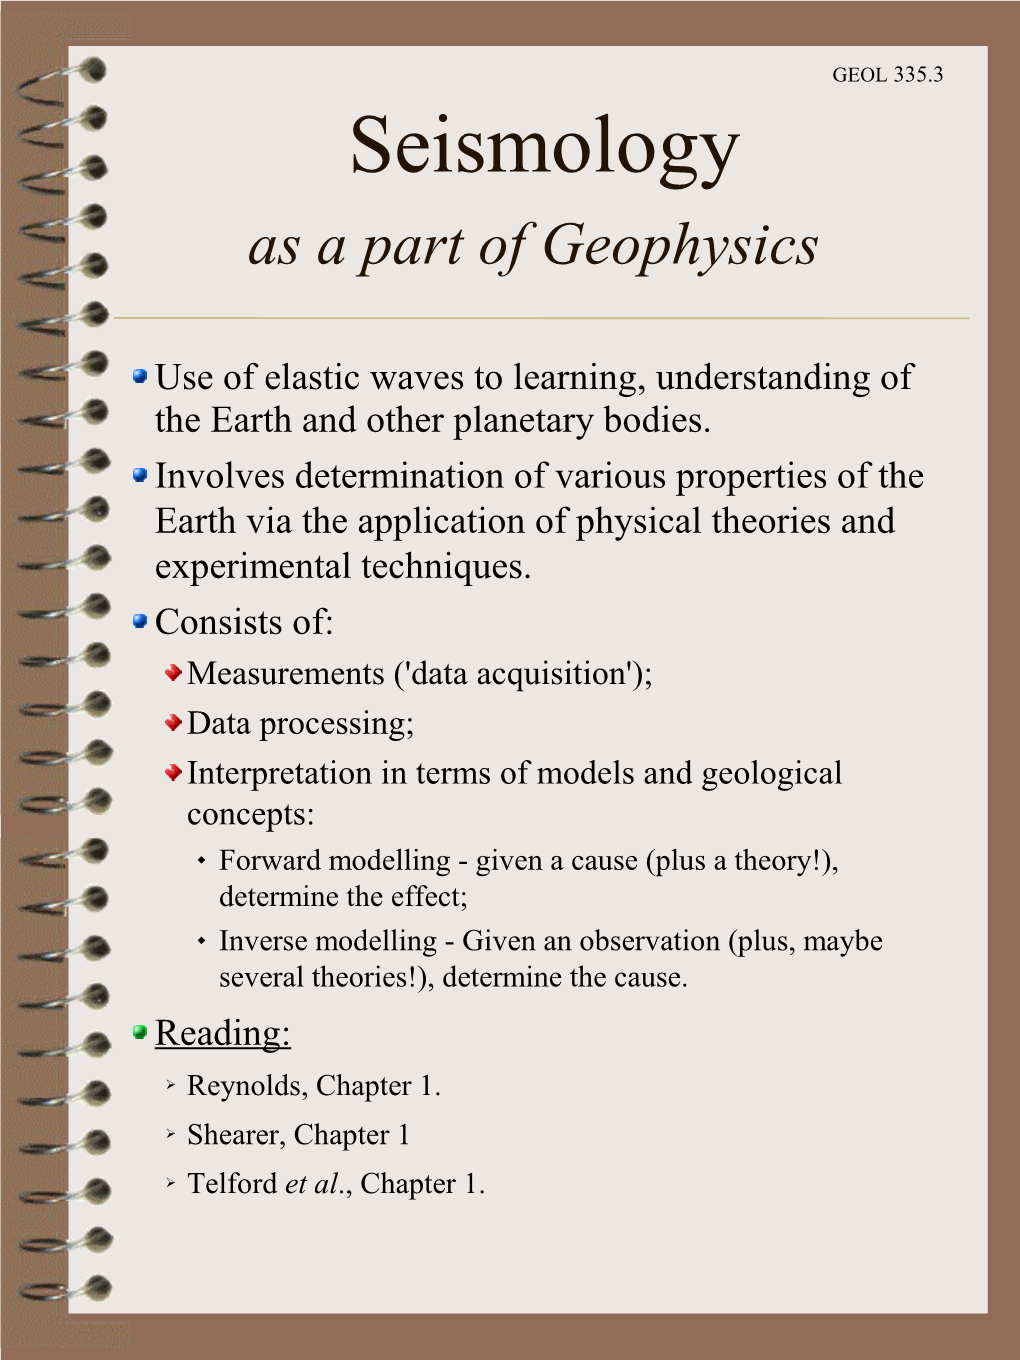 Seismology and Geophysics